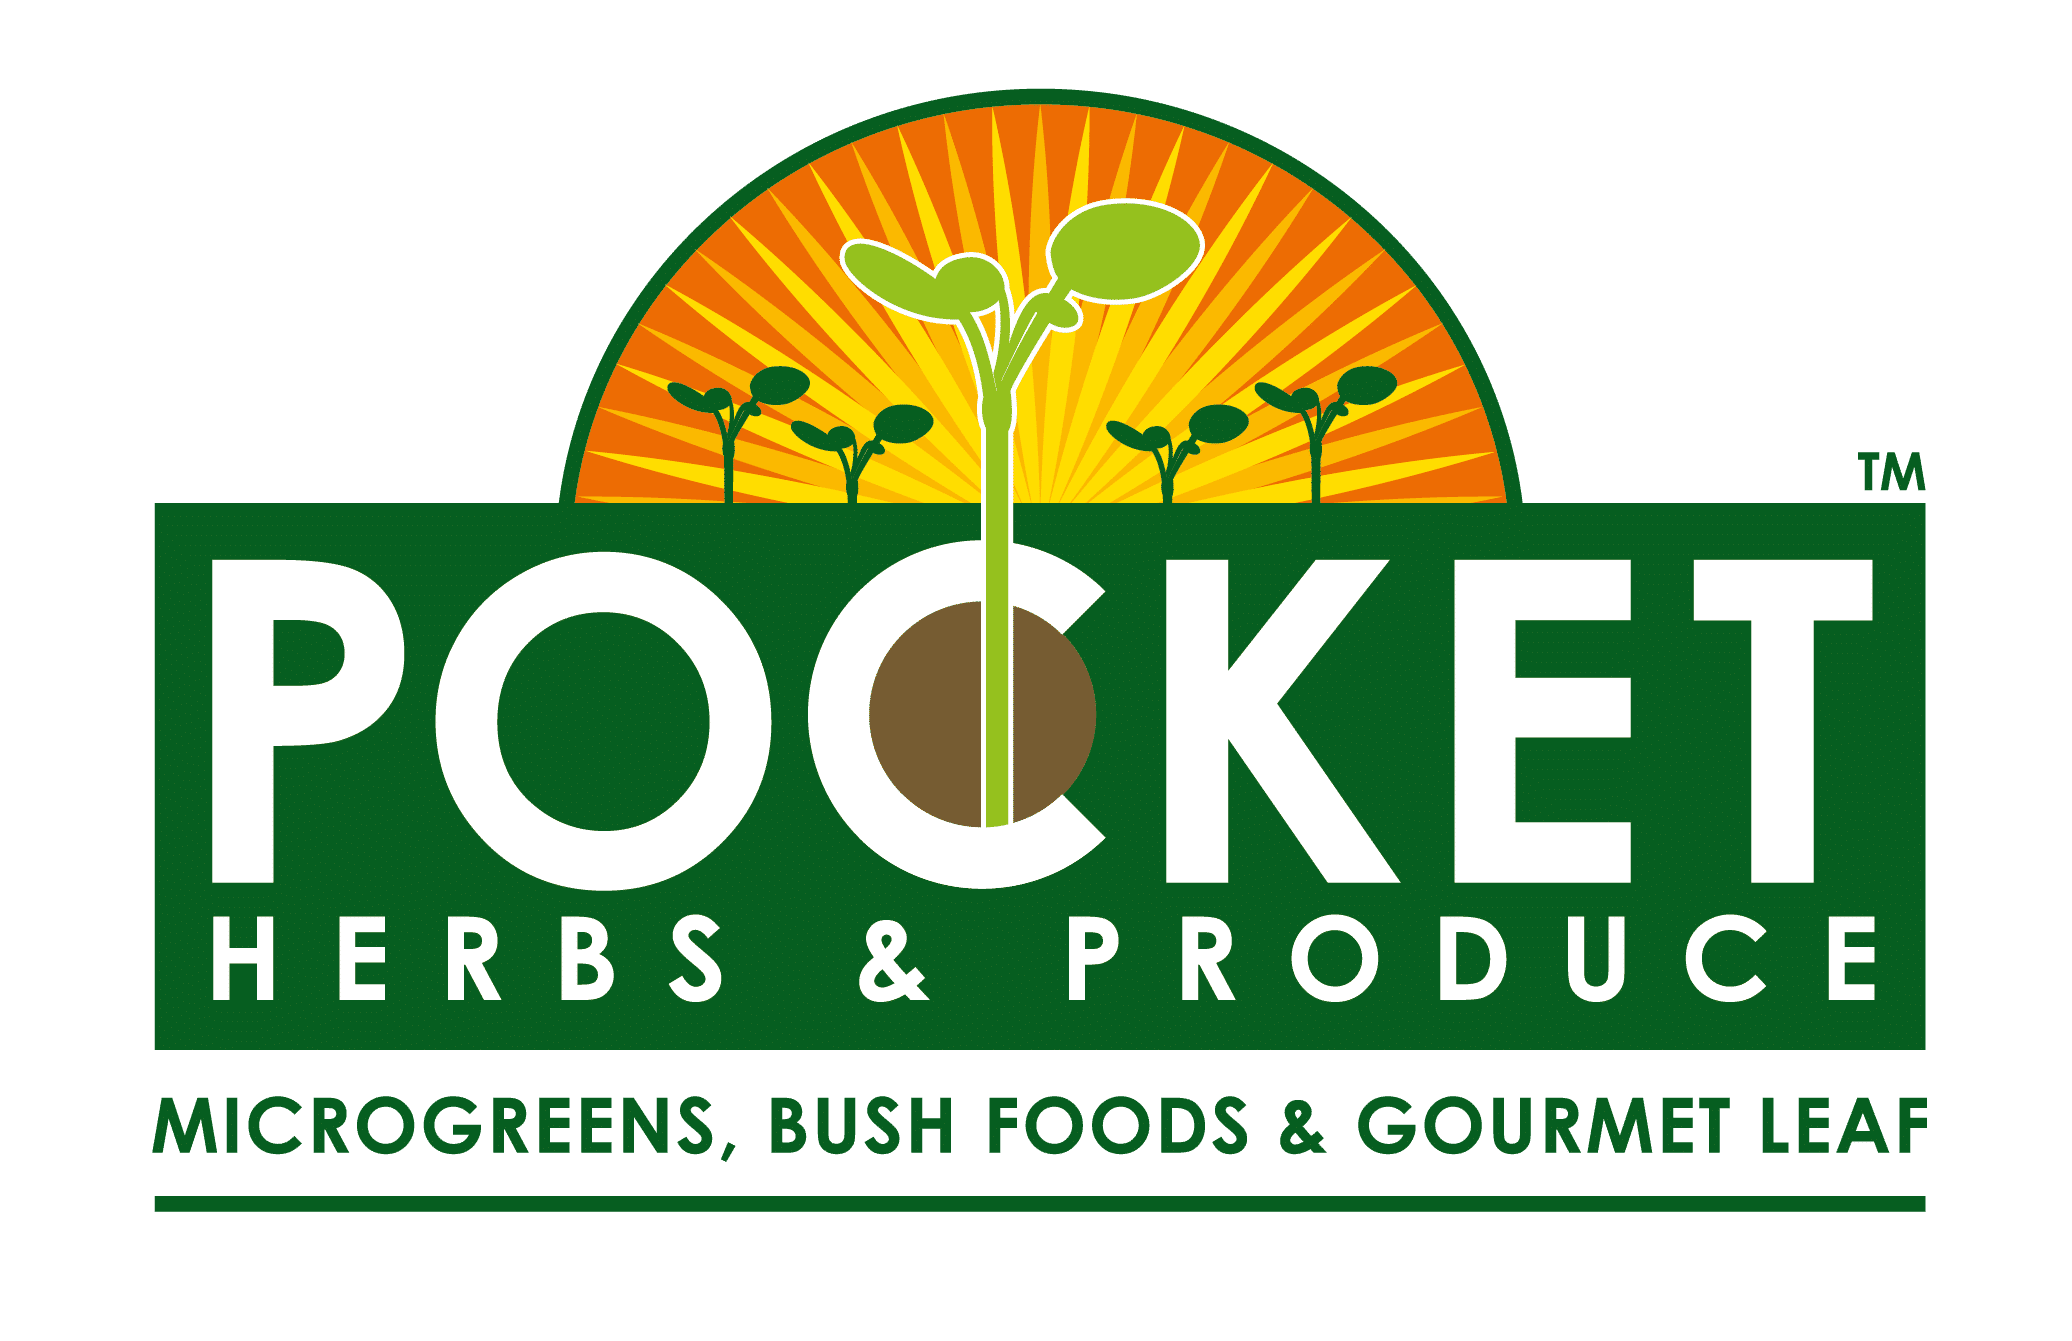 Pocket Herbs